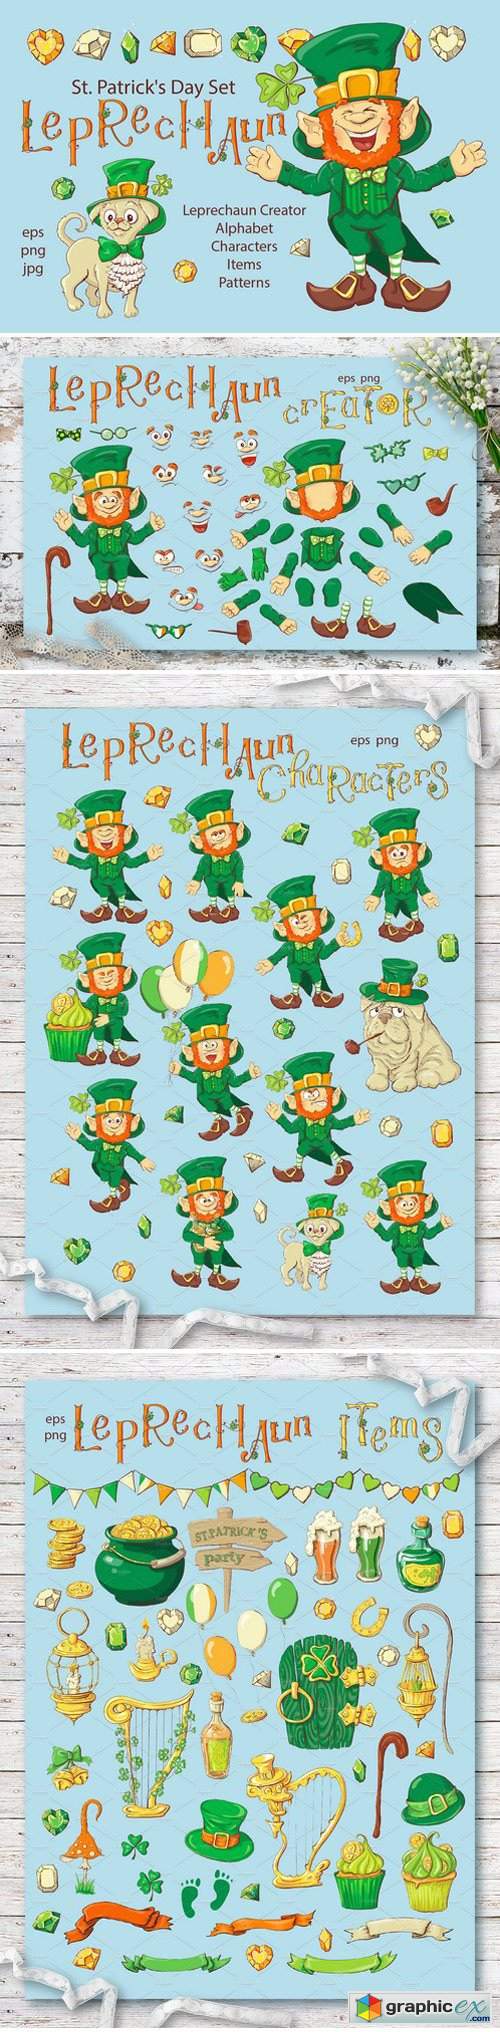 Leprechaun – St. Patrick’s Day Set